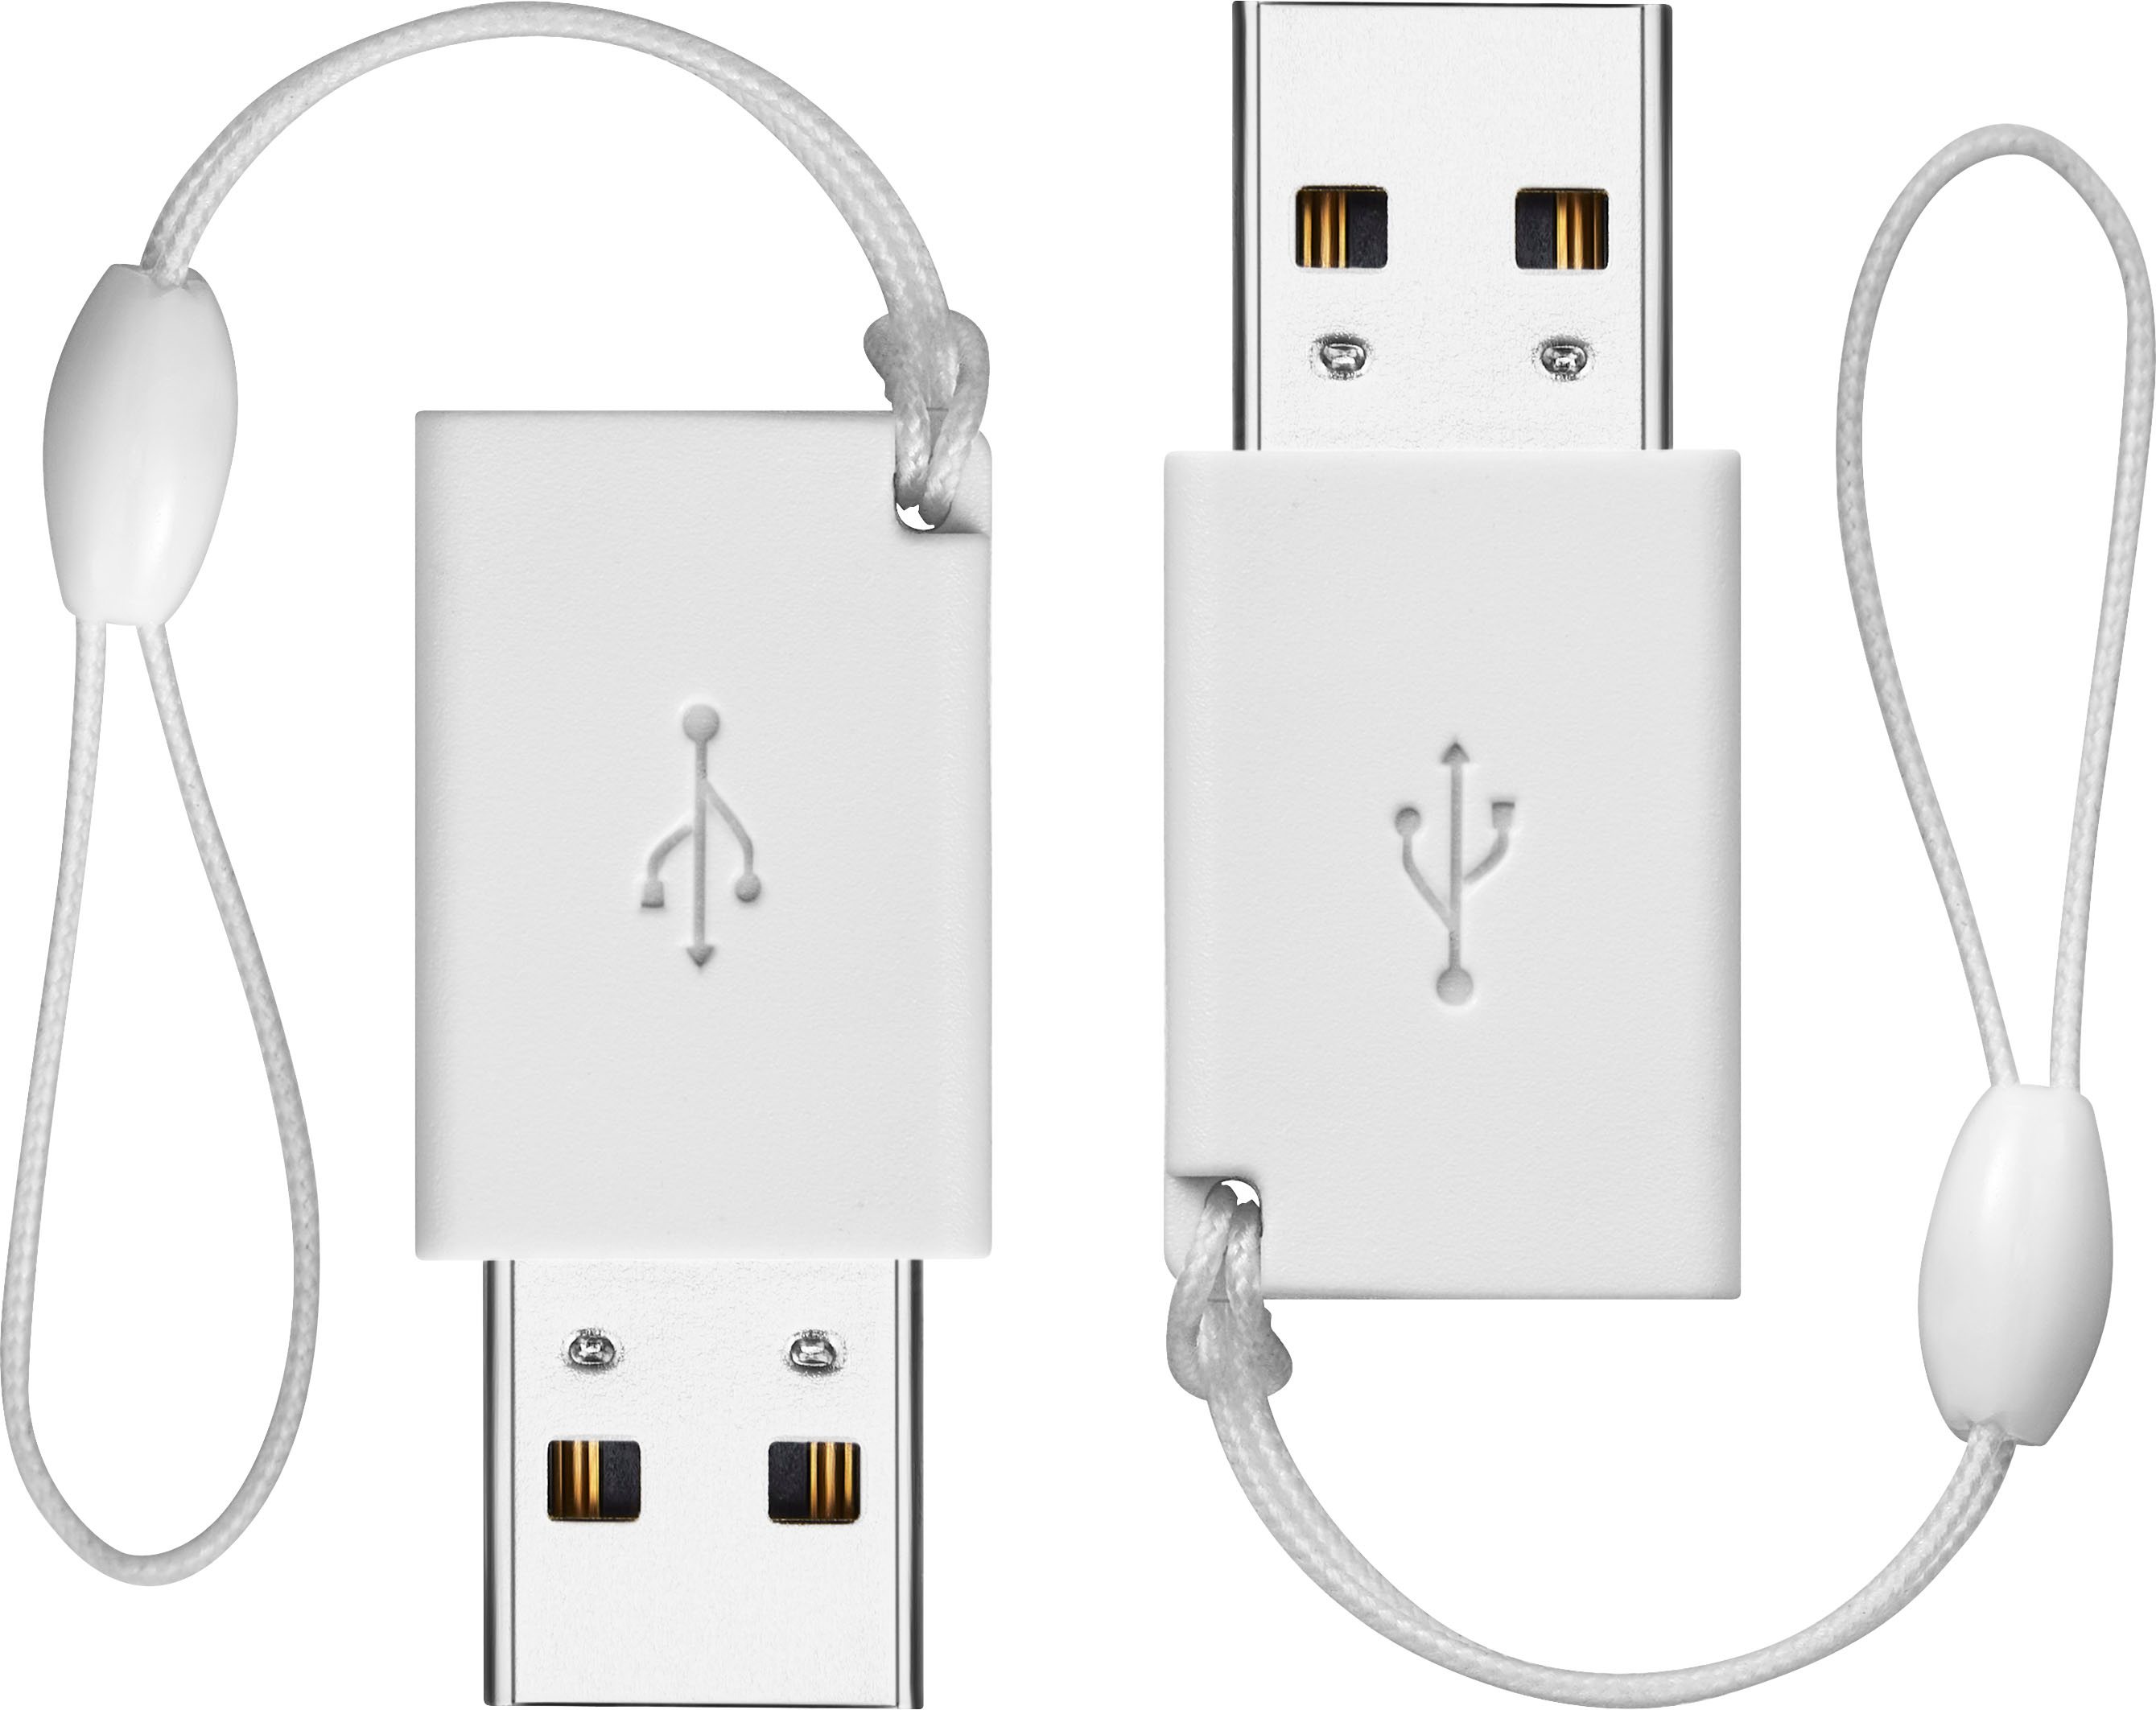 2 câbles USB 3.0 femelle vers USB-C mâle – 15 cm